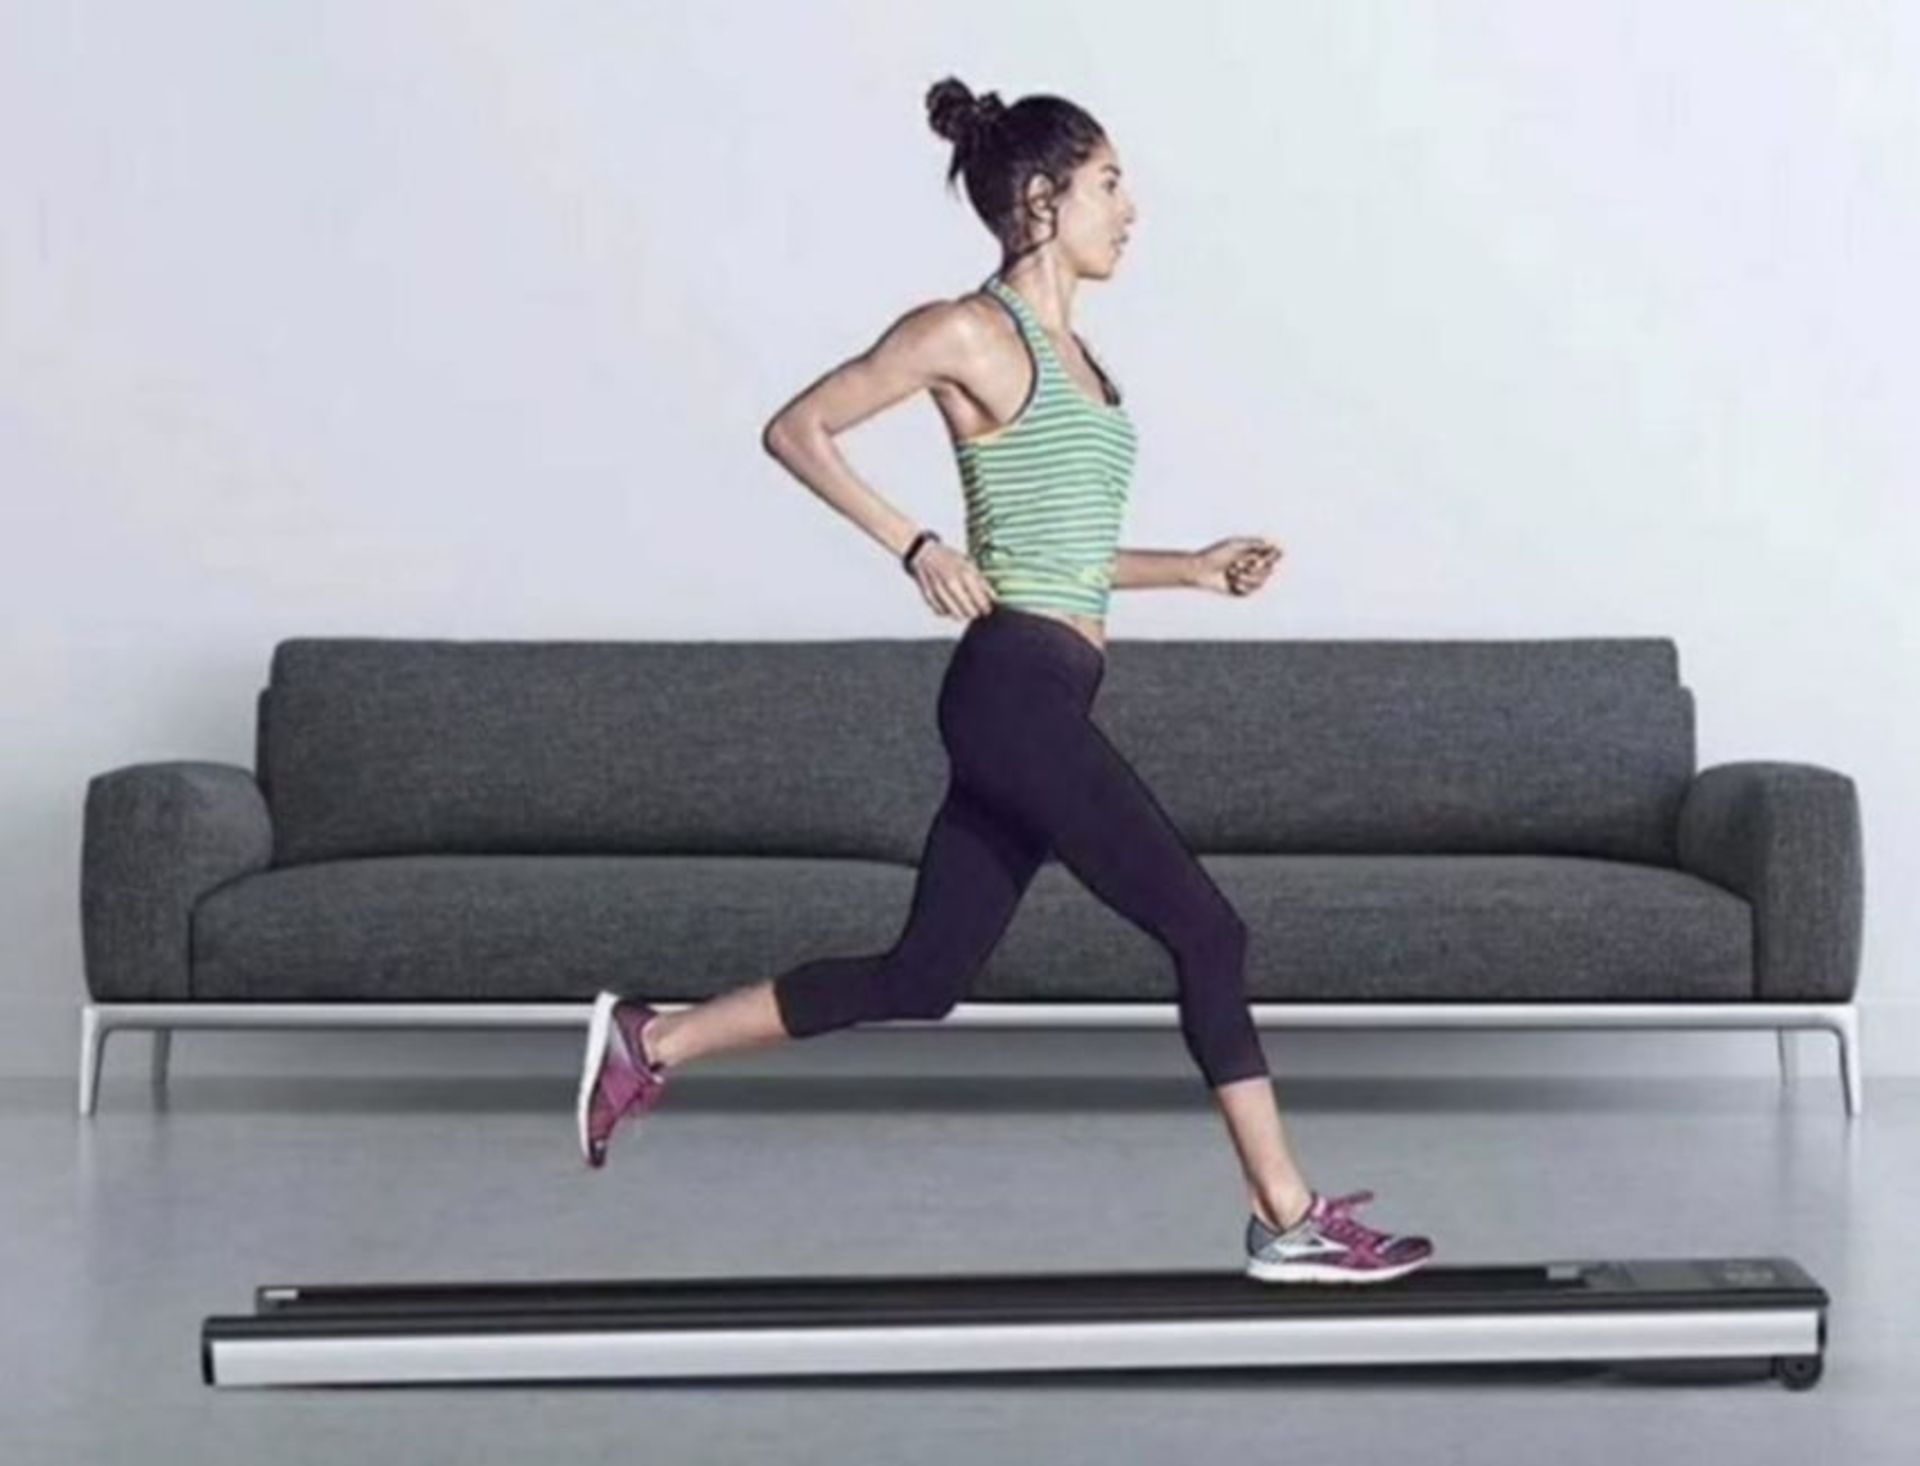 1 x Slim Tread Ultra Thin Smart Treadmill Running / Walking Machine - Lightweight With Folding - Image 9 of 11